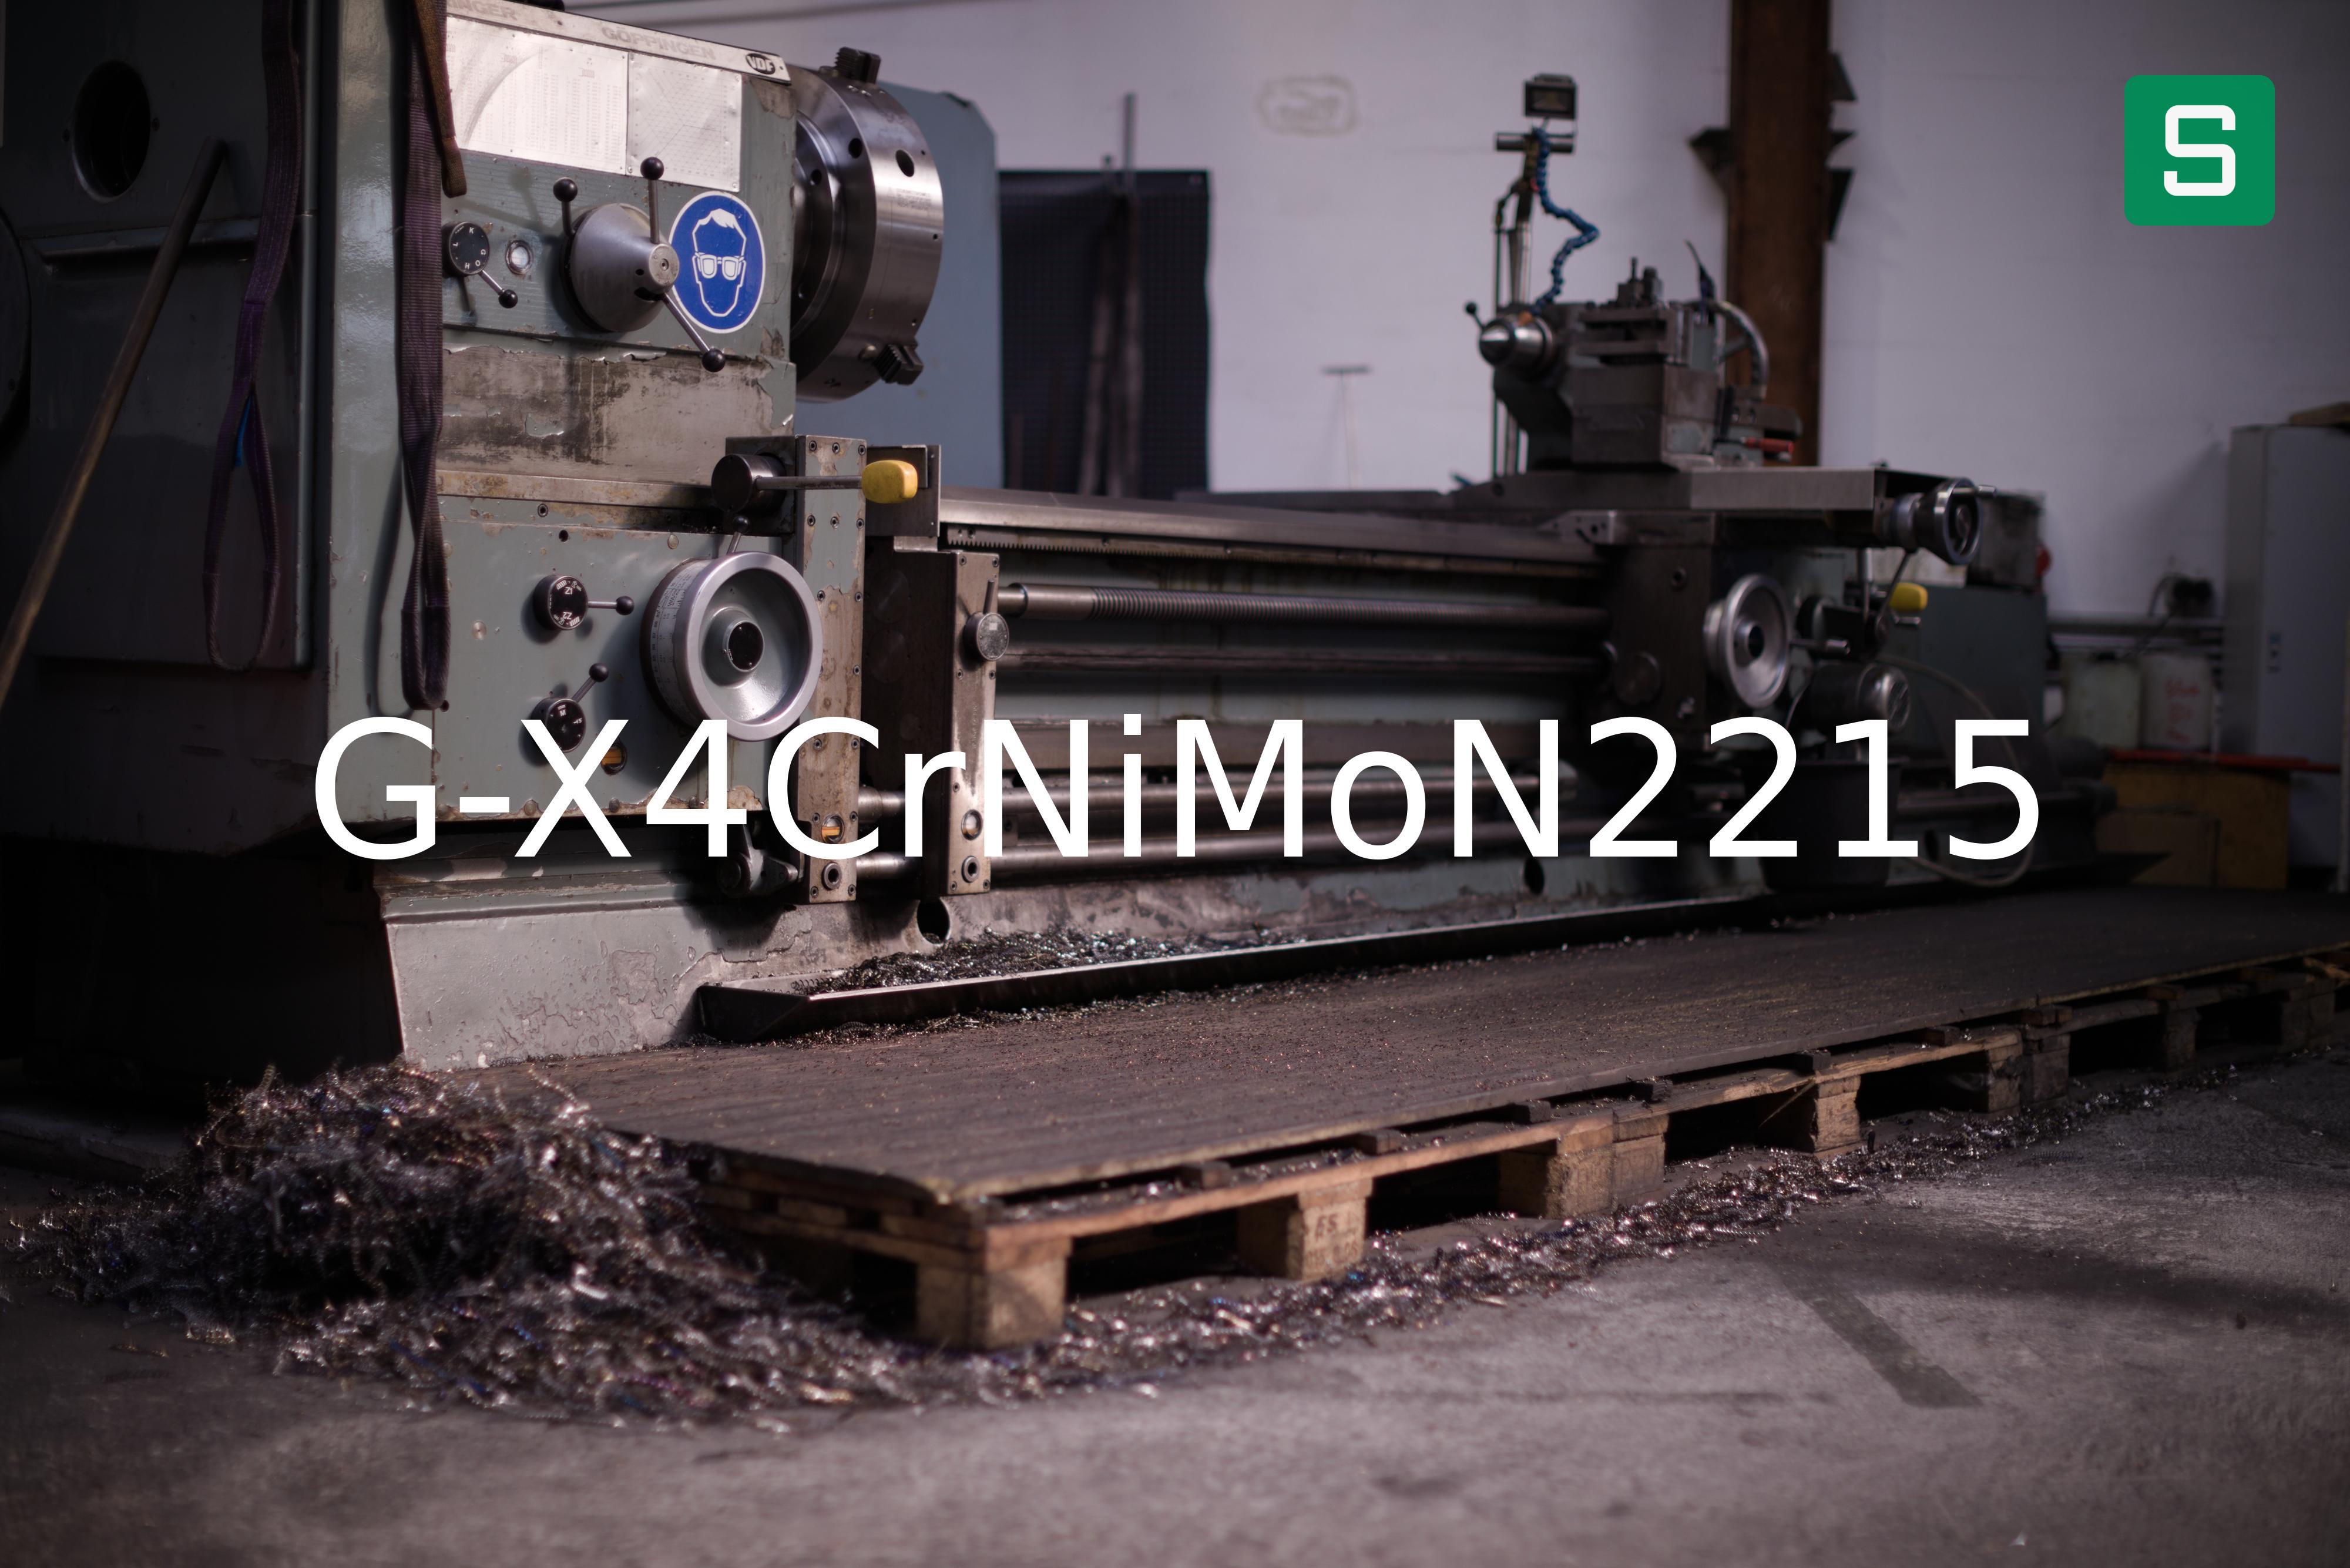 Steel Material: G-X4CrNiMoN2215